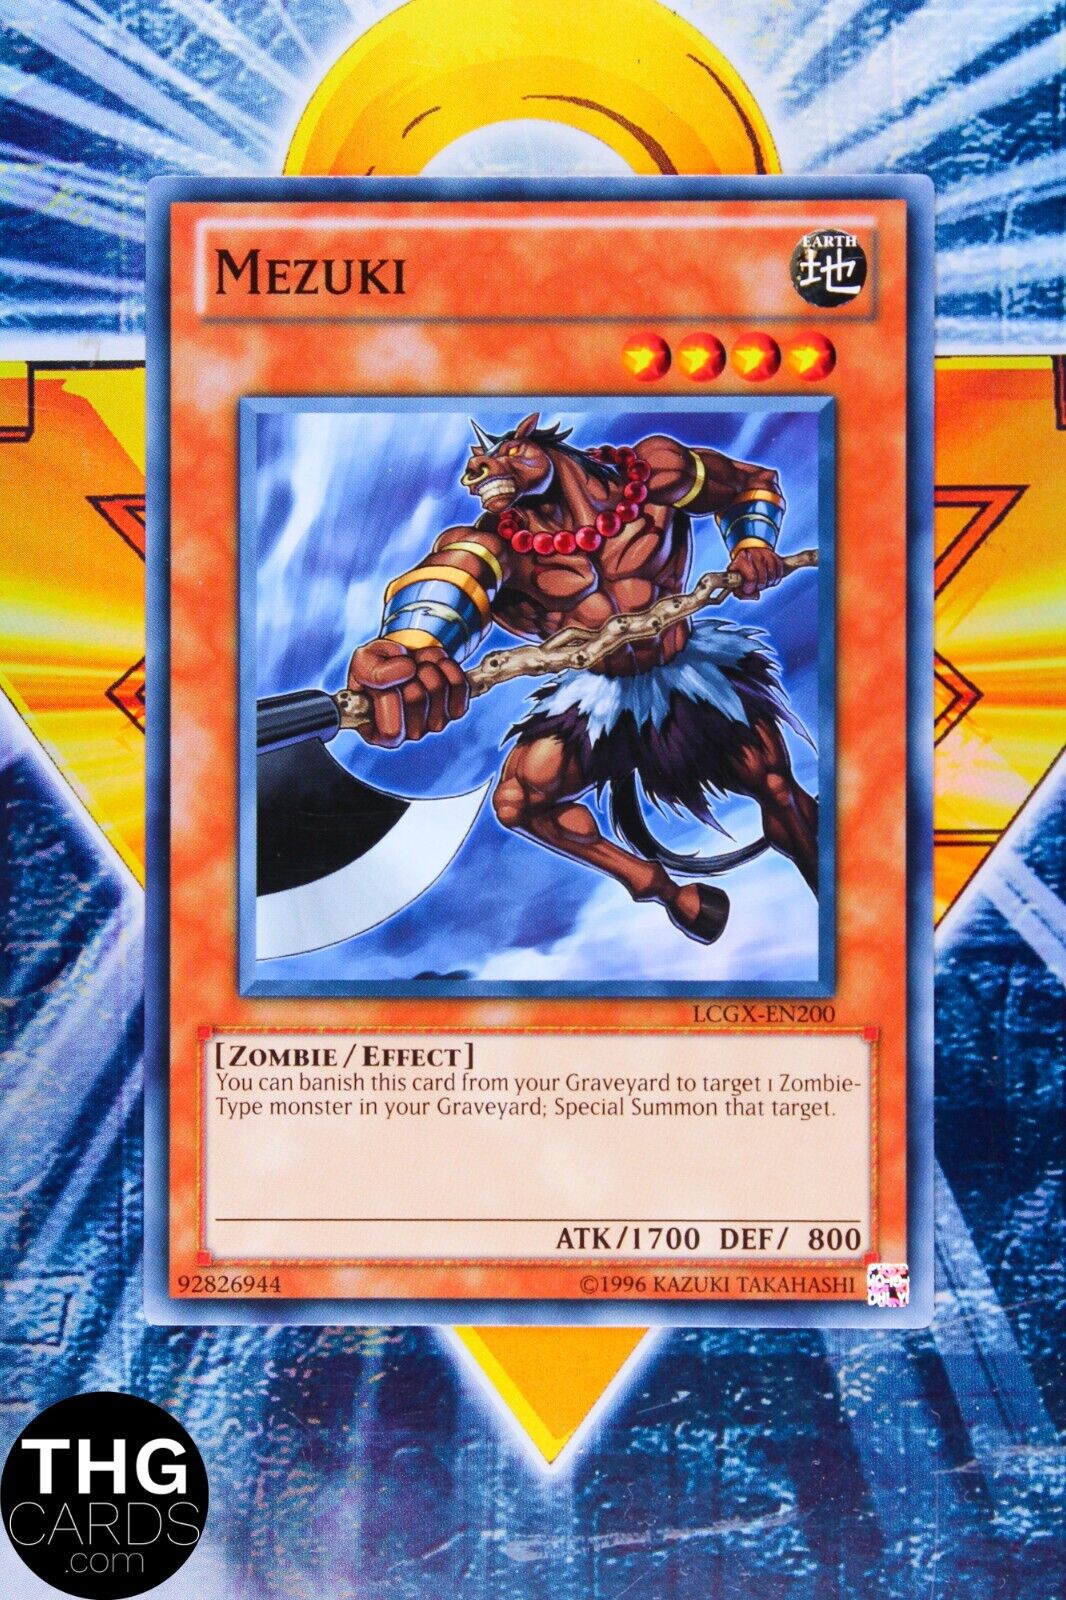 Mezuki LCGX-EN200 Common Yugioh Card